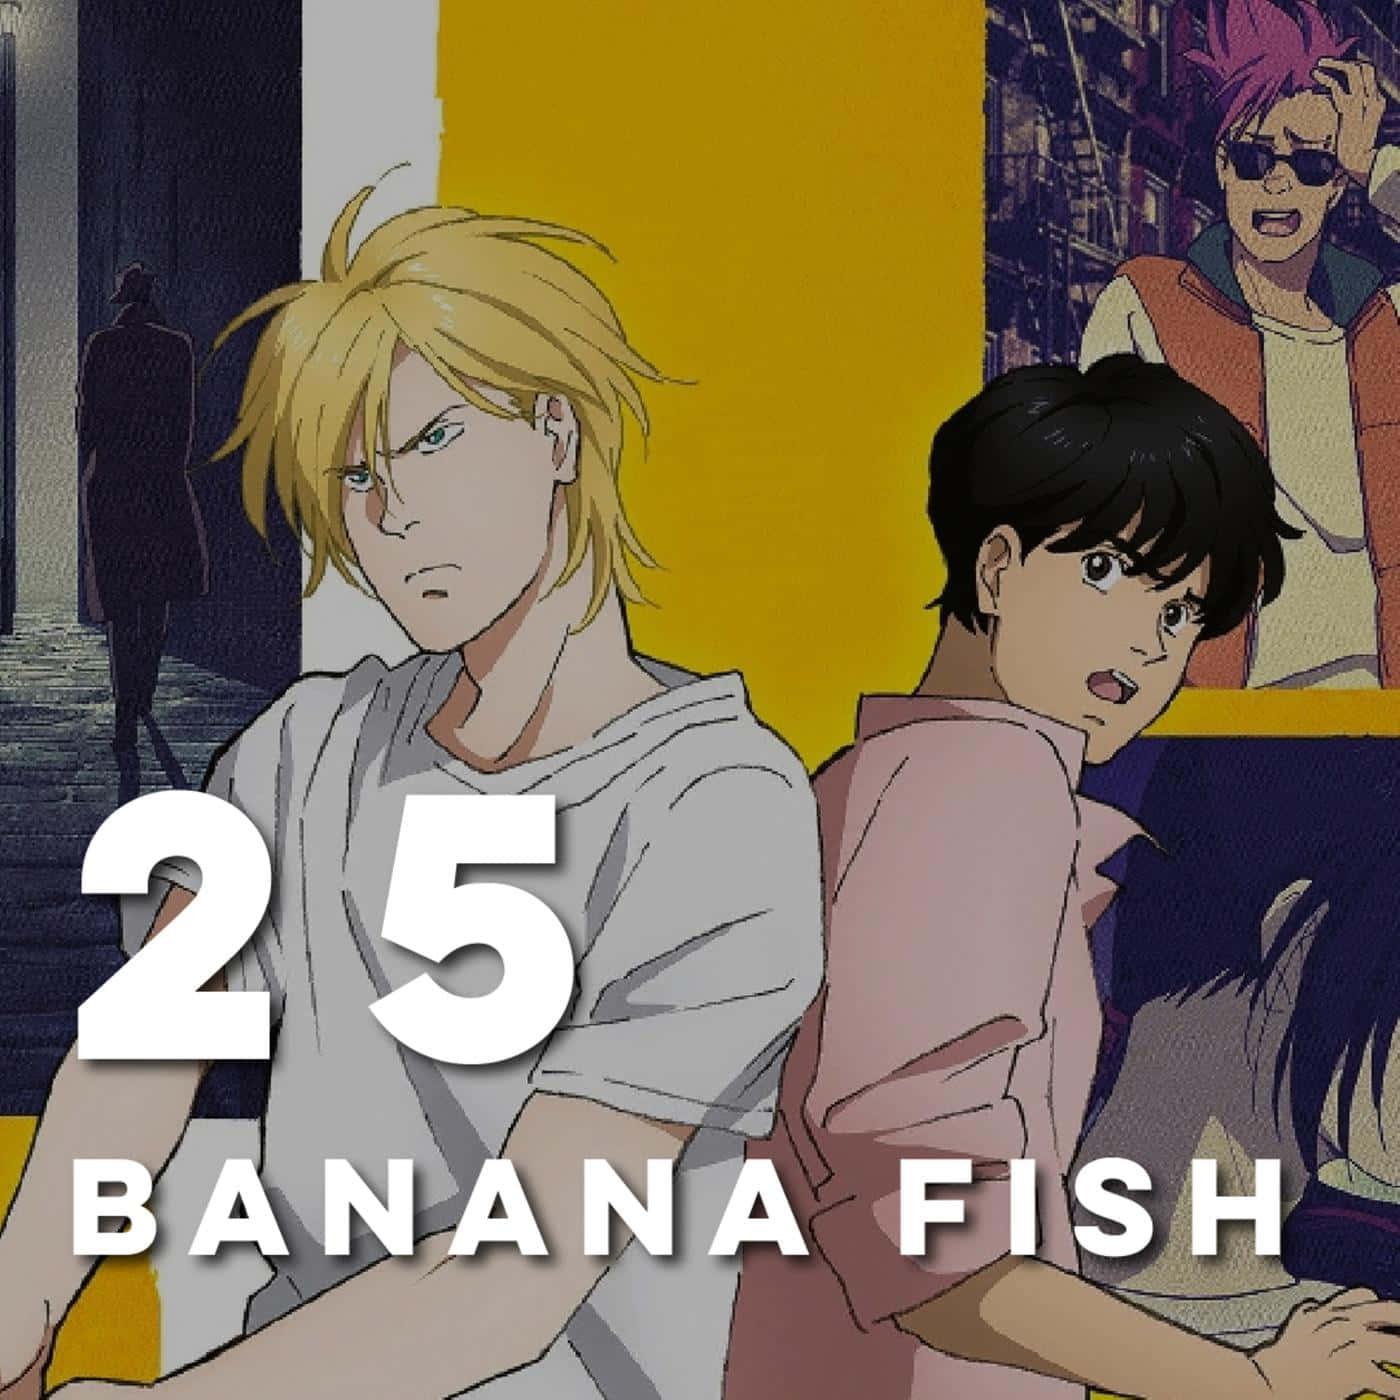 Download Image Japanese Anime Series Banana Fish